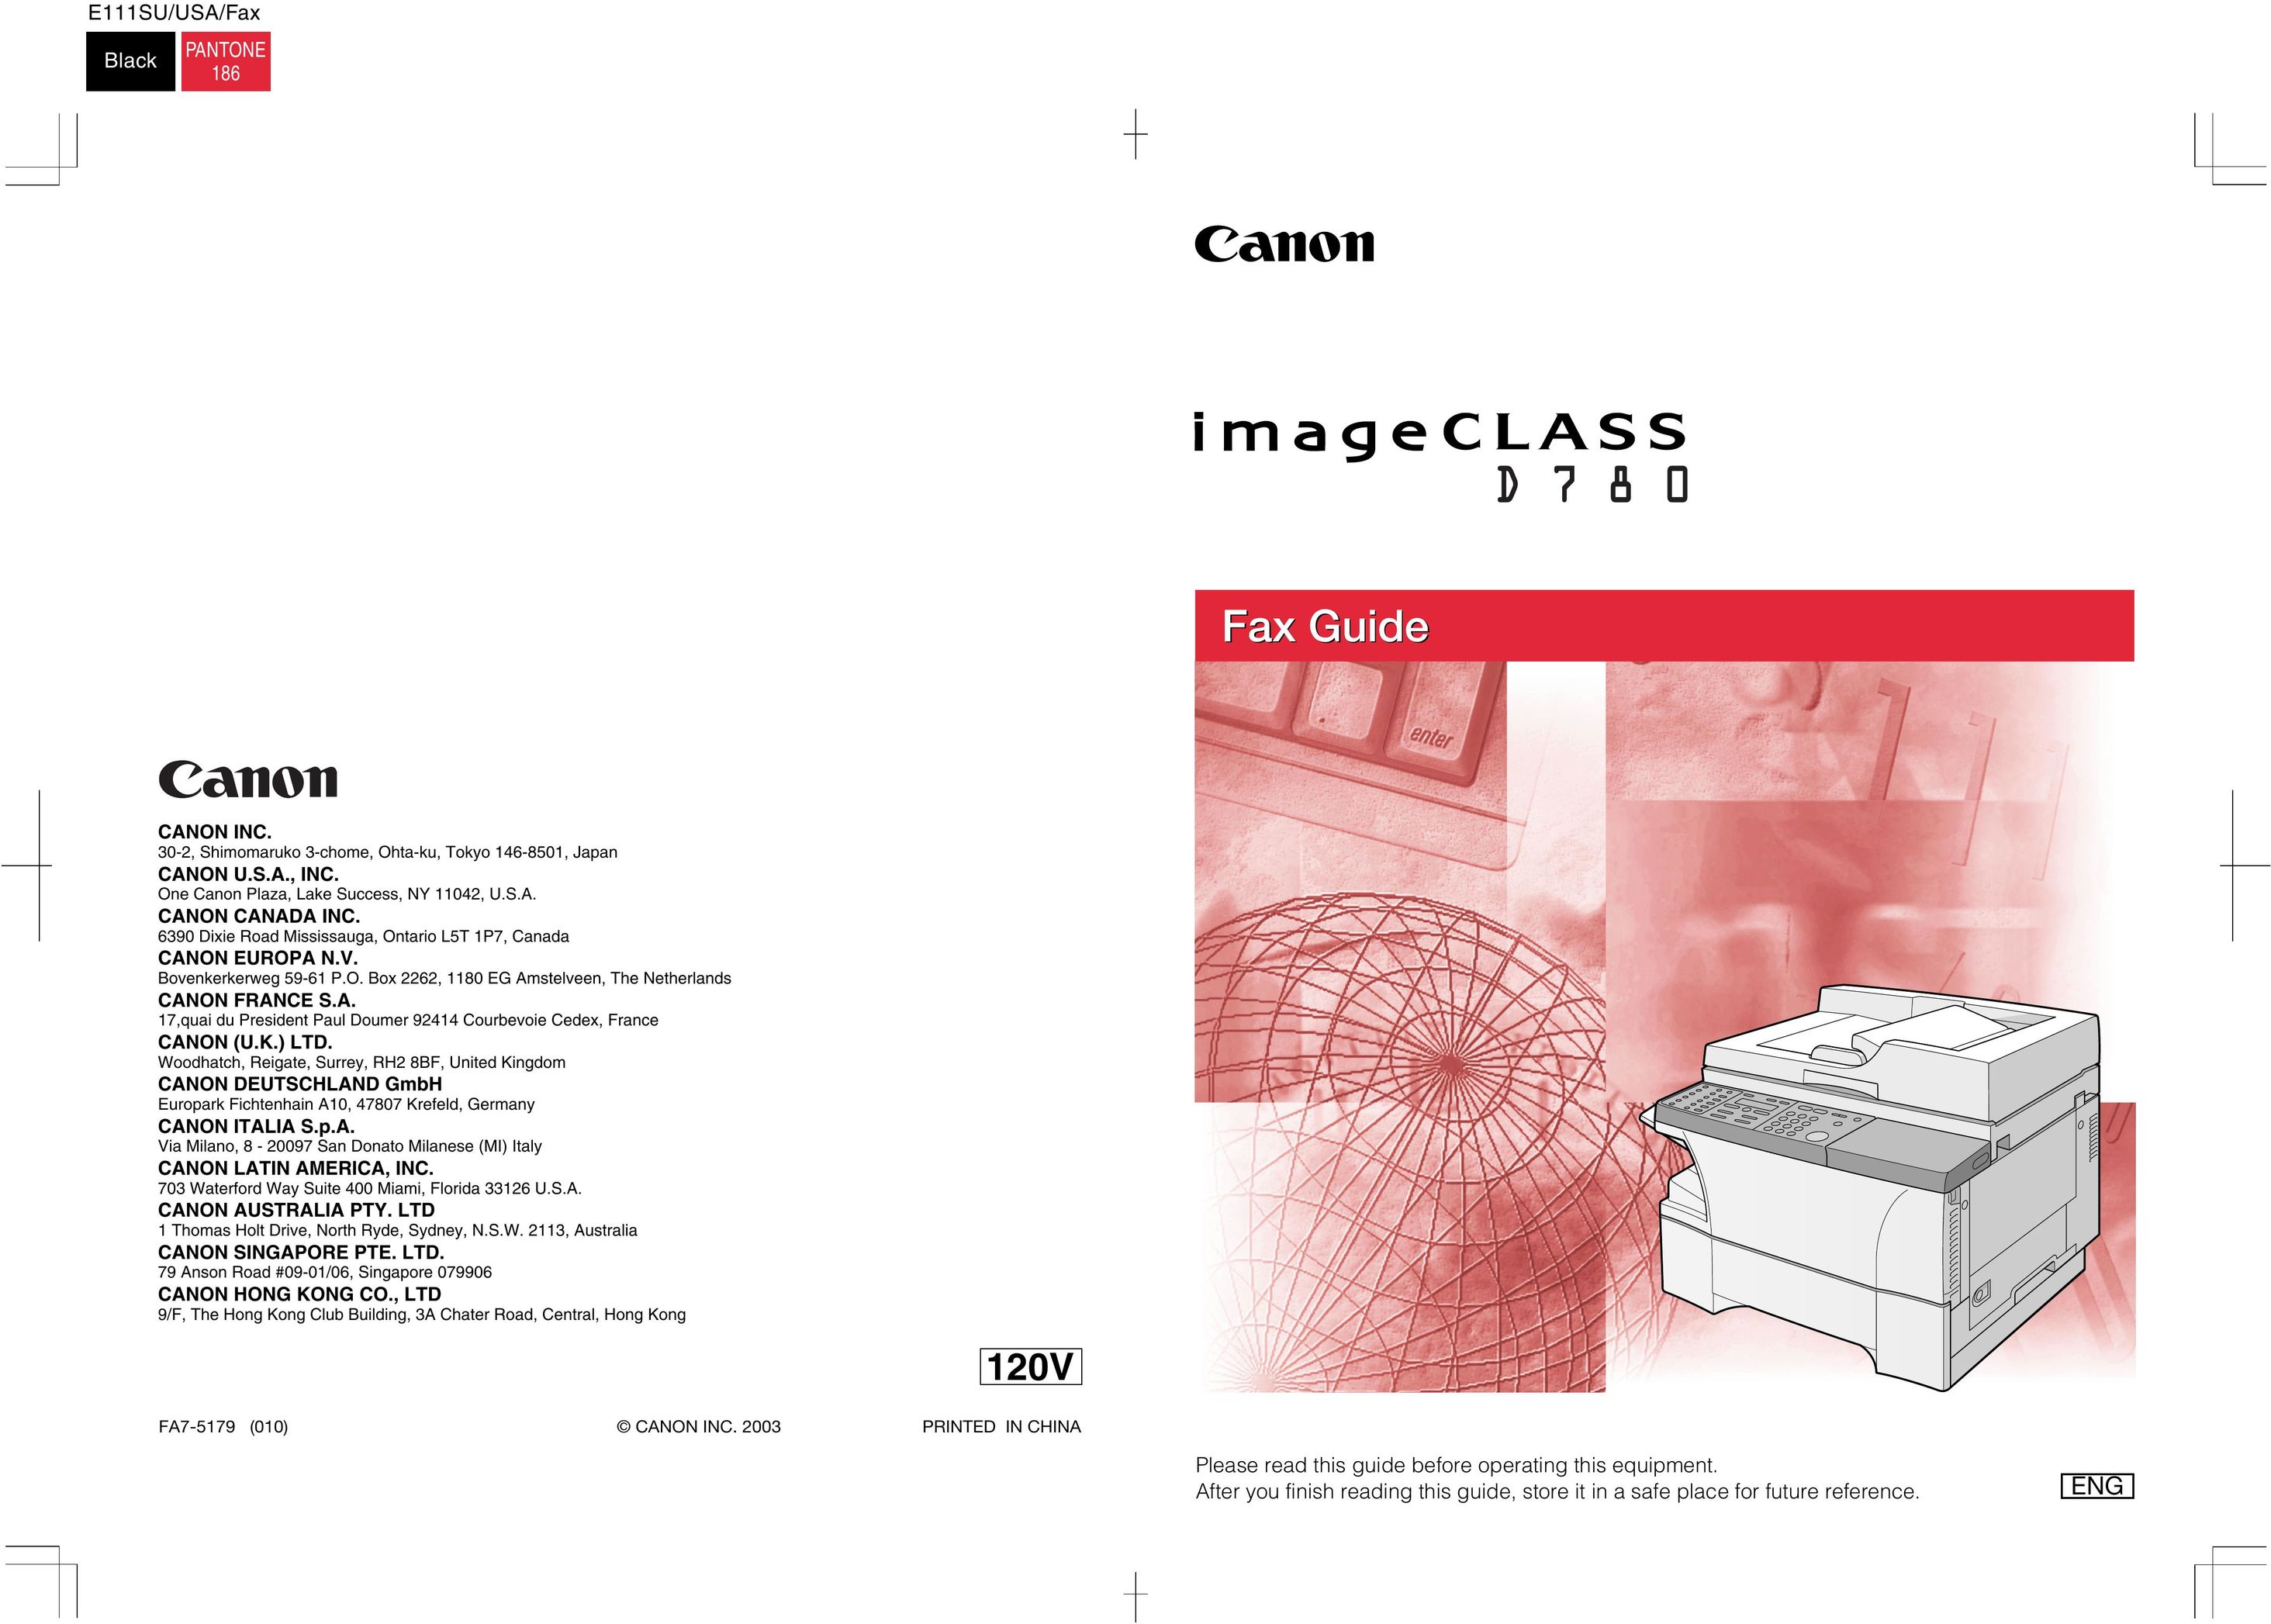 GE D780 Fax Machine User Manual